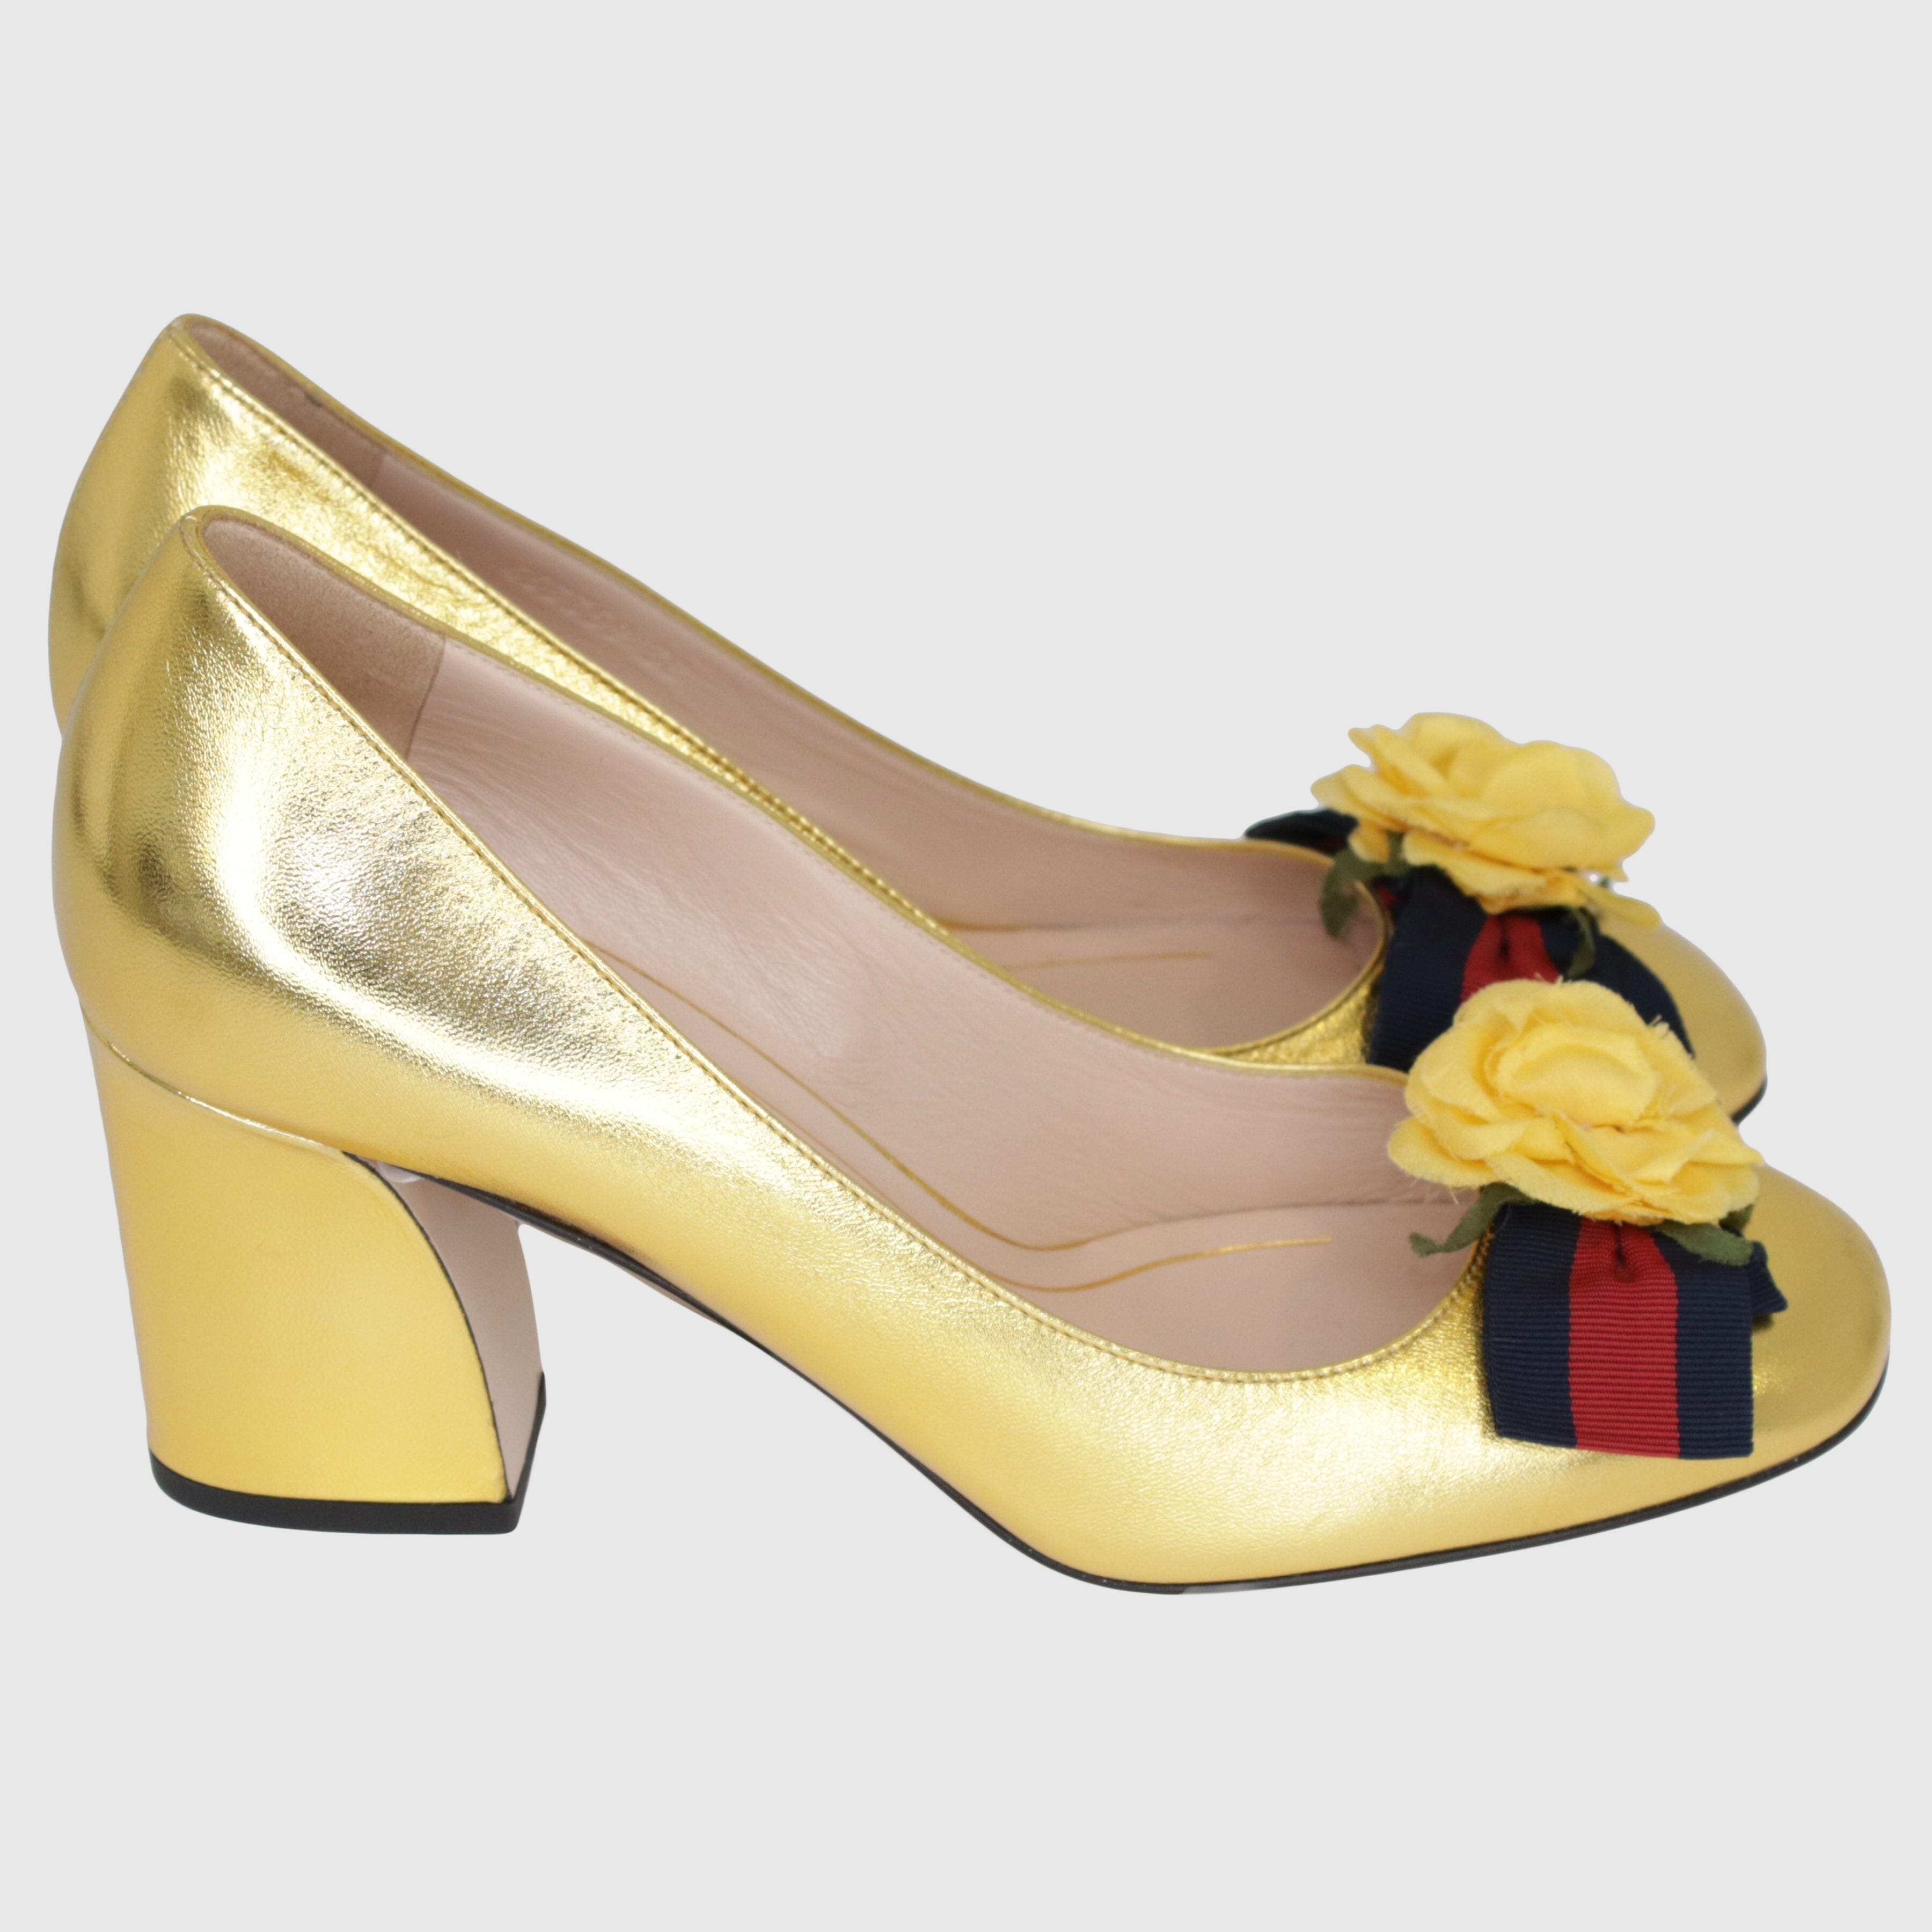 Metallic Gold Web Bow Rose Pumps Shoes Gucci